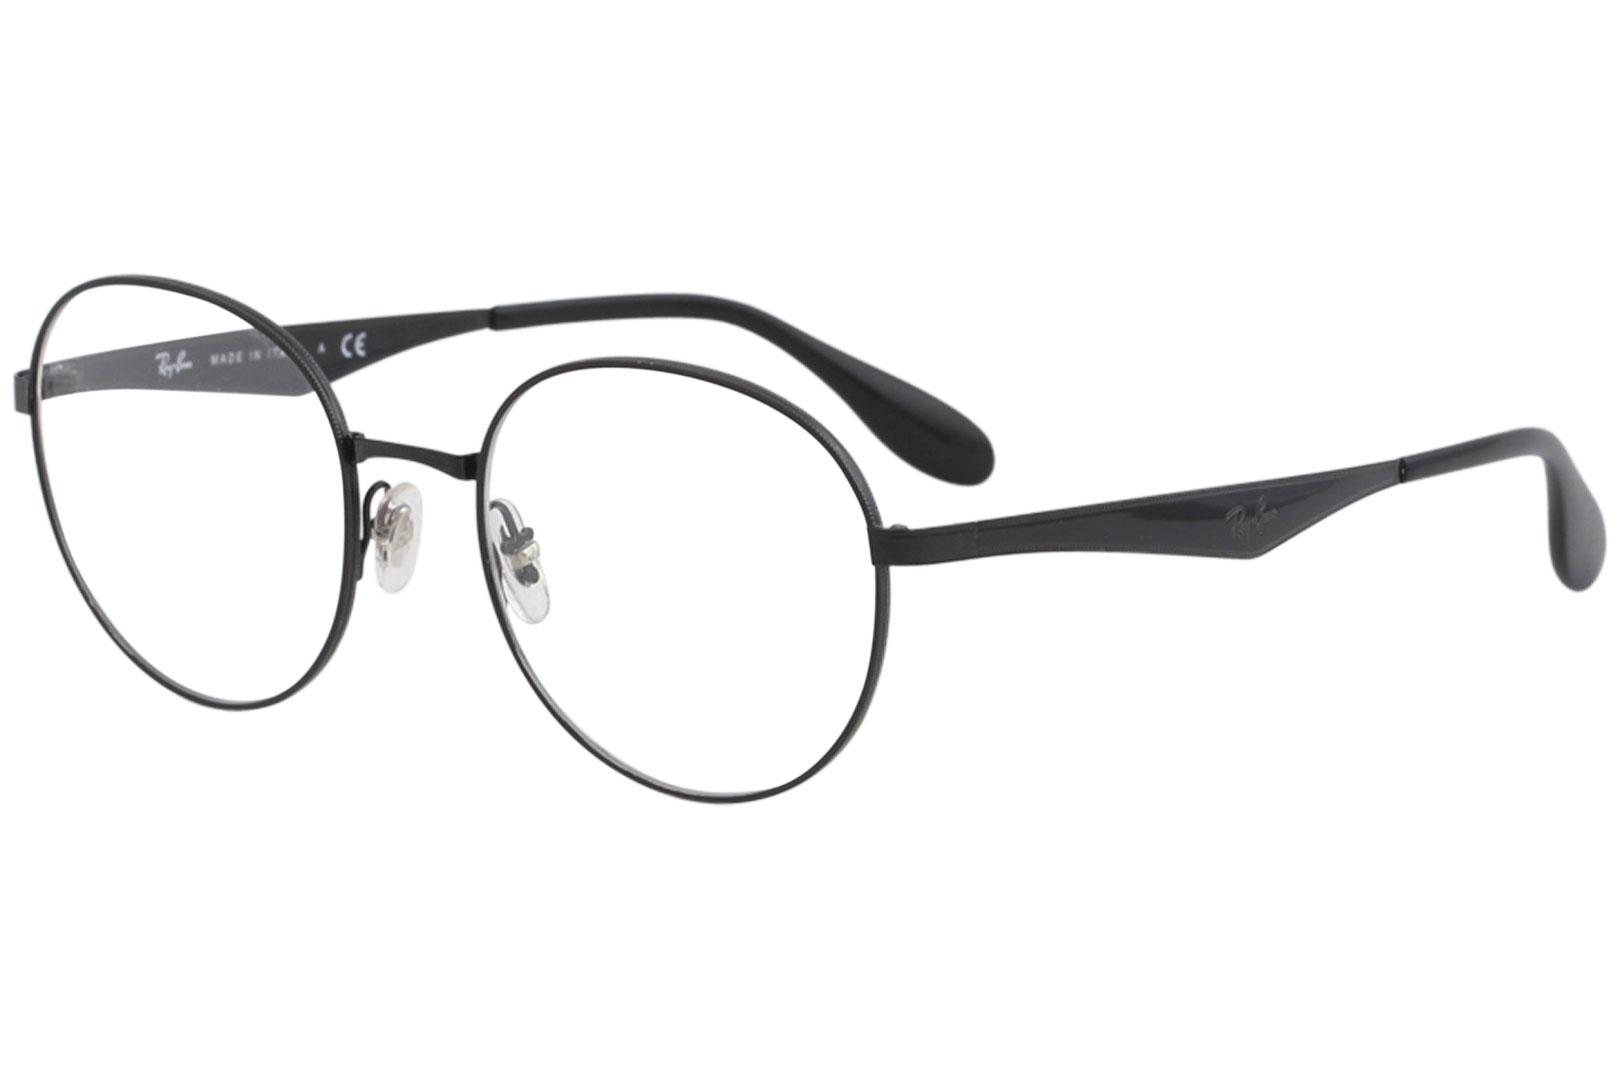 Ray Ban Men's Eyeglasses RX6343 RX/6343 RayBan Full Rim Optical Frame - Gold - Lens 50 Bridge 19 Temple 145mm